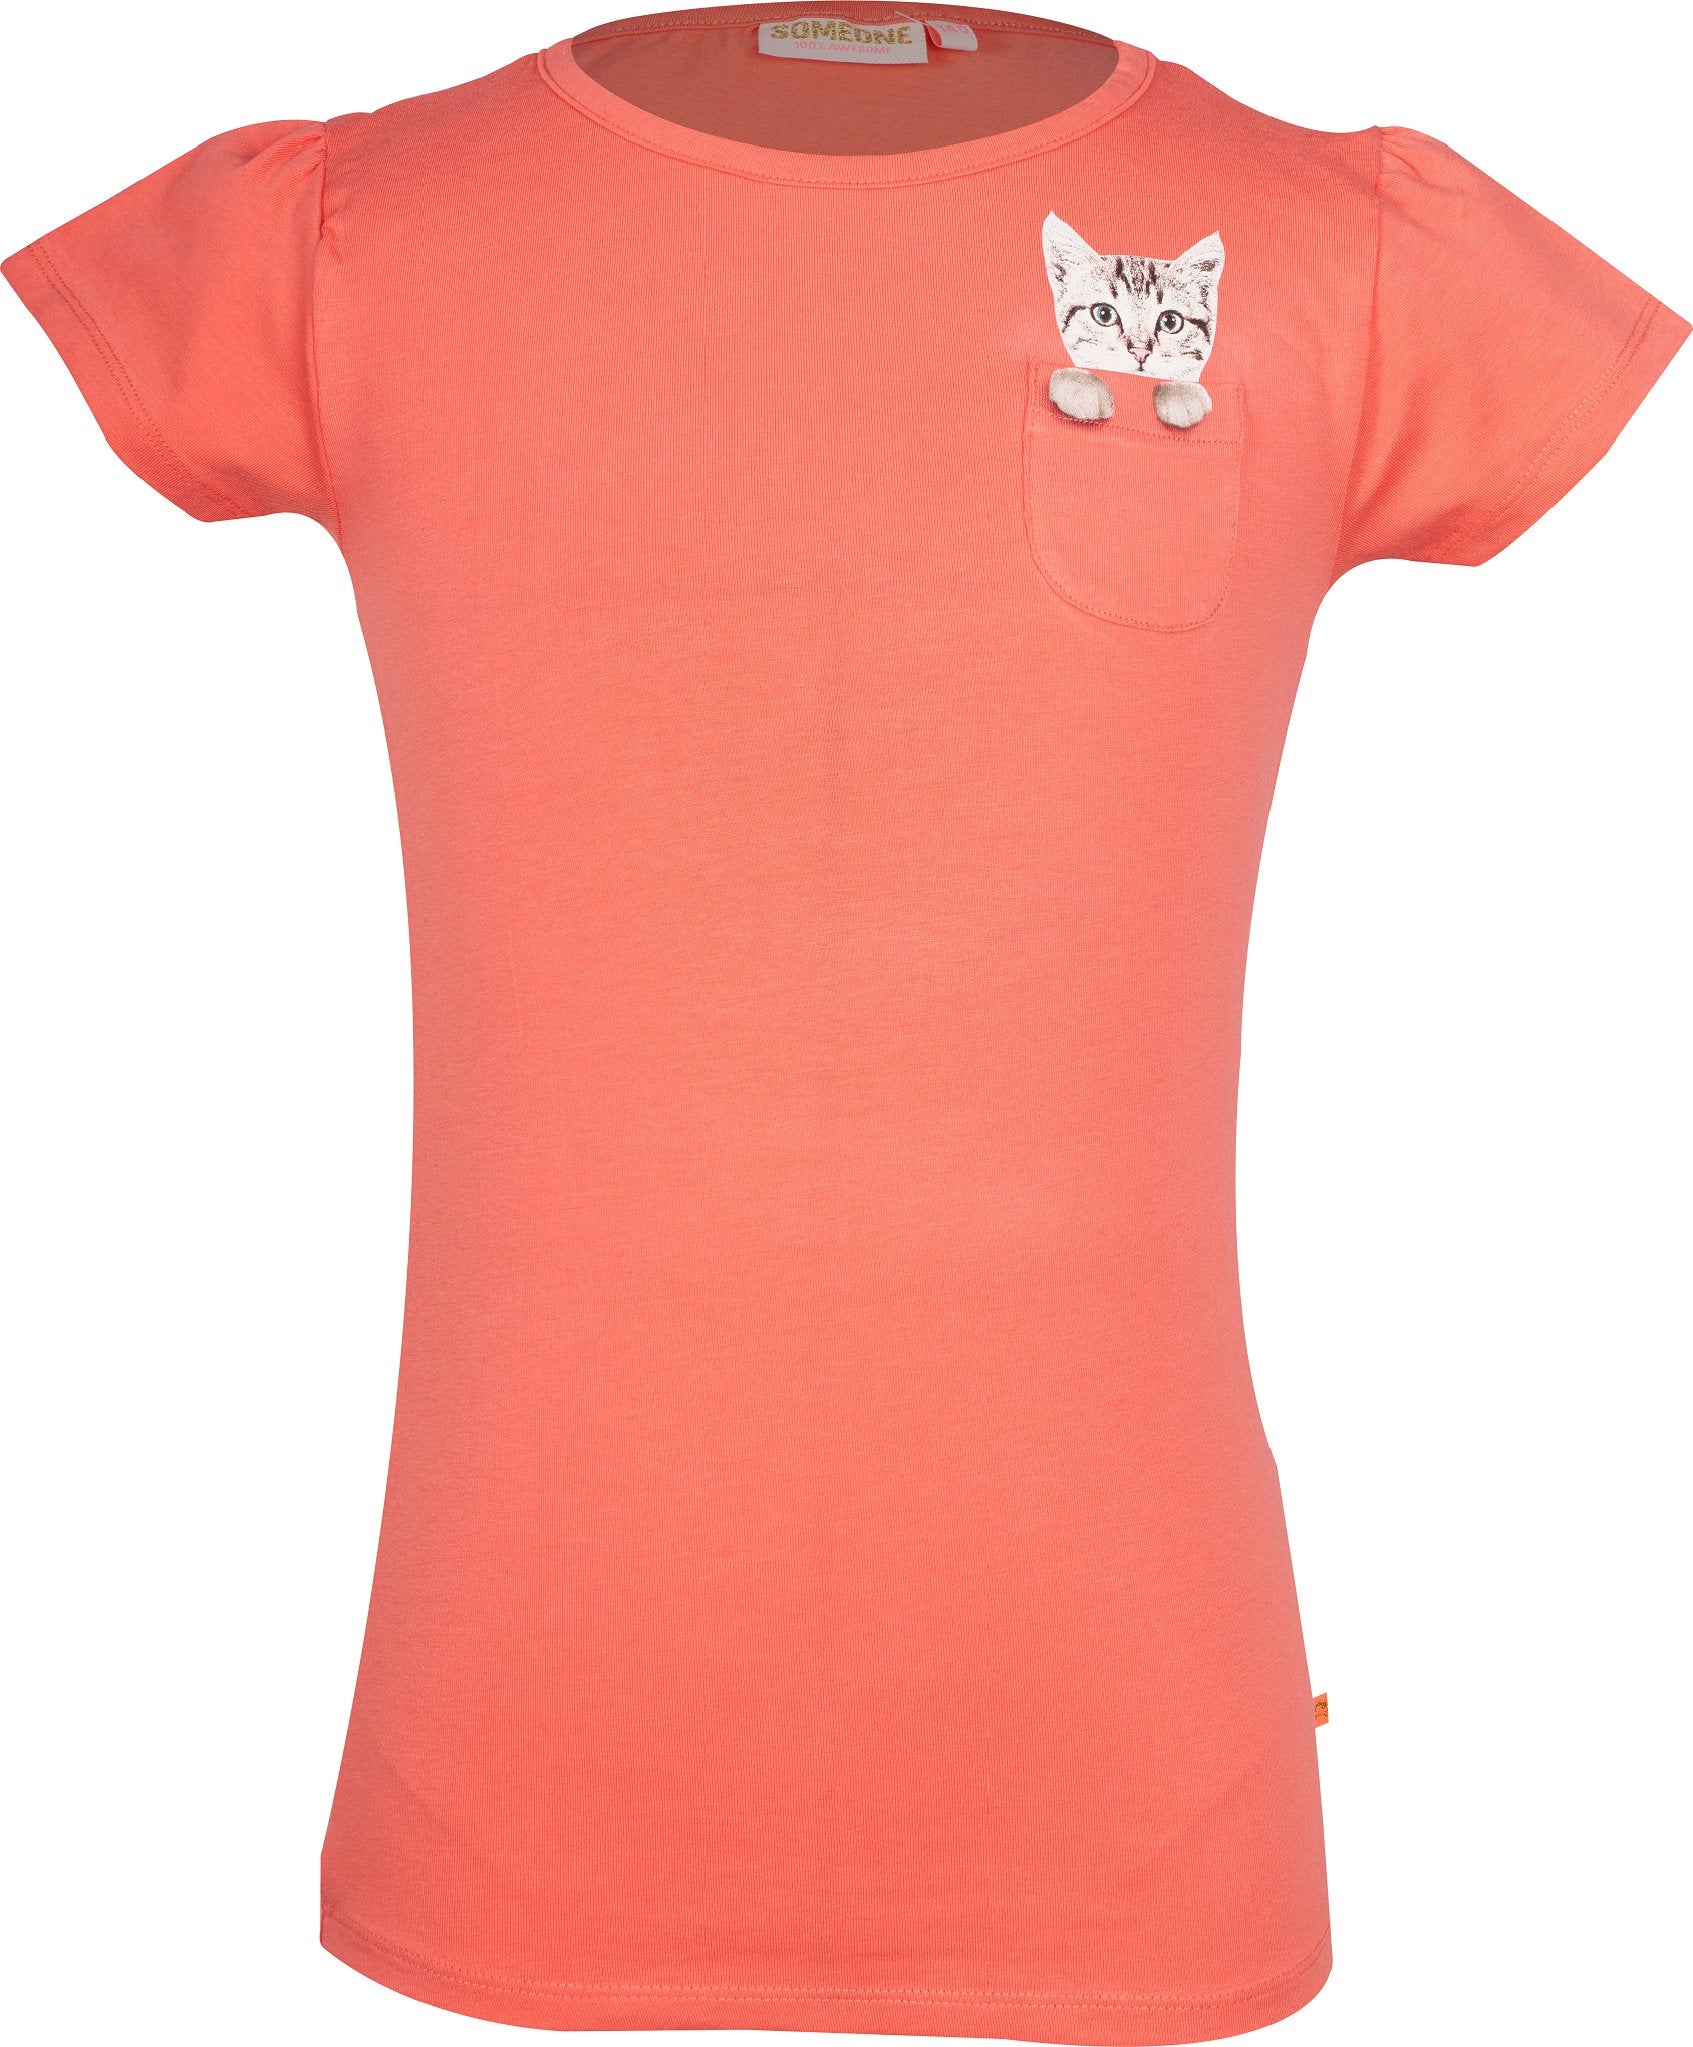 Meisjes T-shirt Kitty van Someone in de kleur Coral in maat 140.